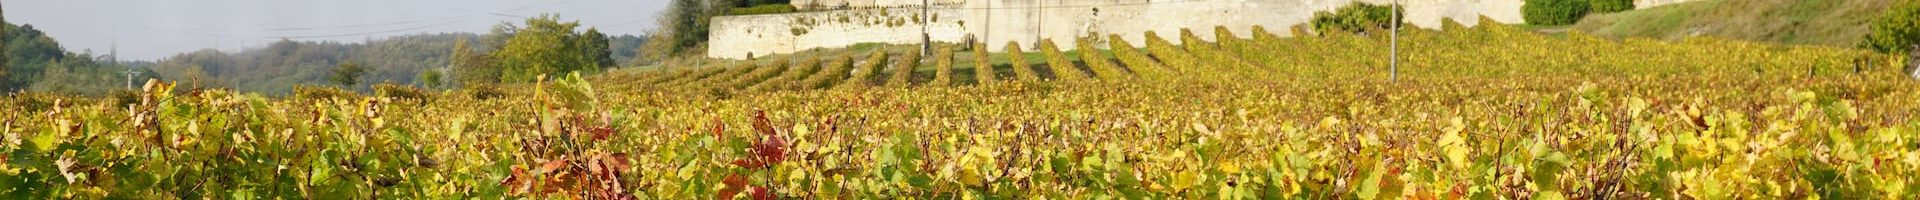 loire-vineyard-france_745811419